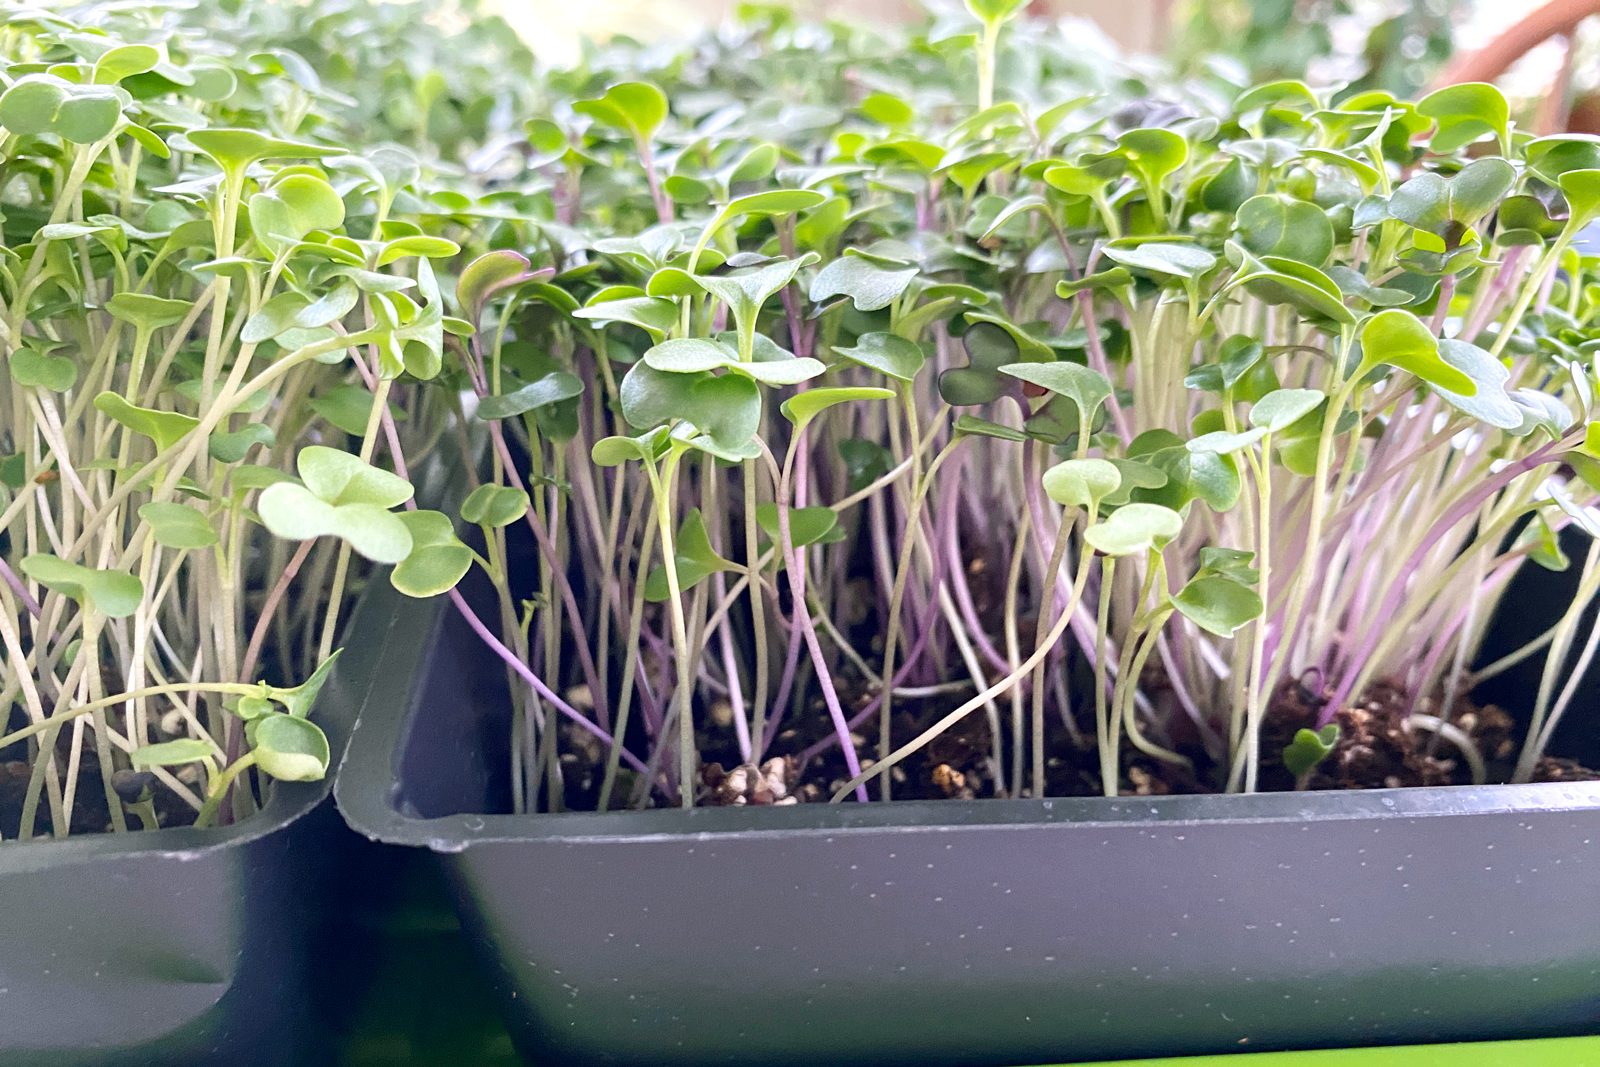 How To Grow Microgreens Indoors